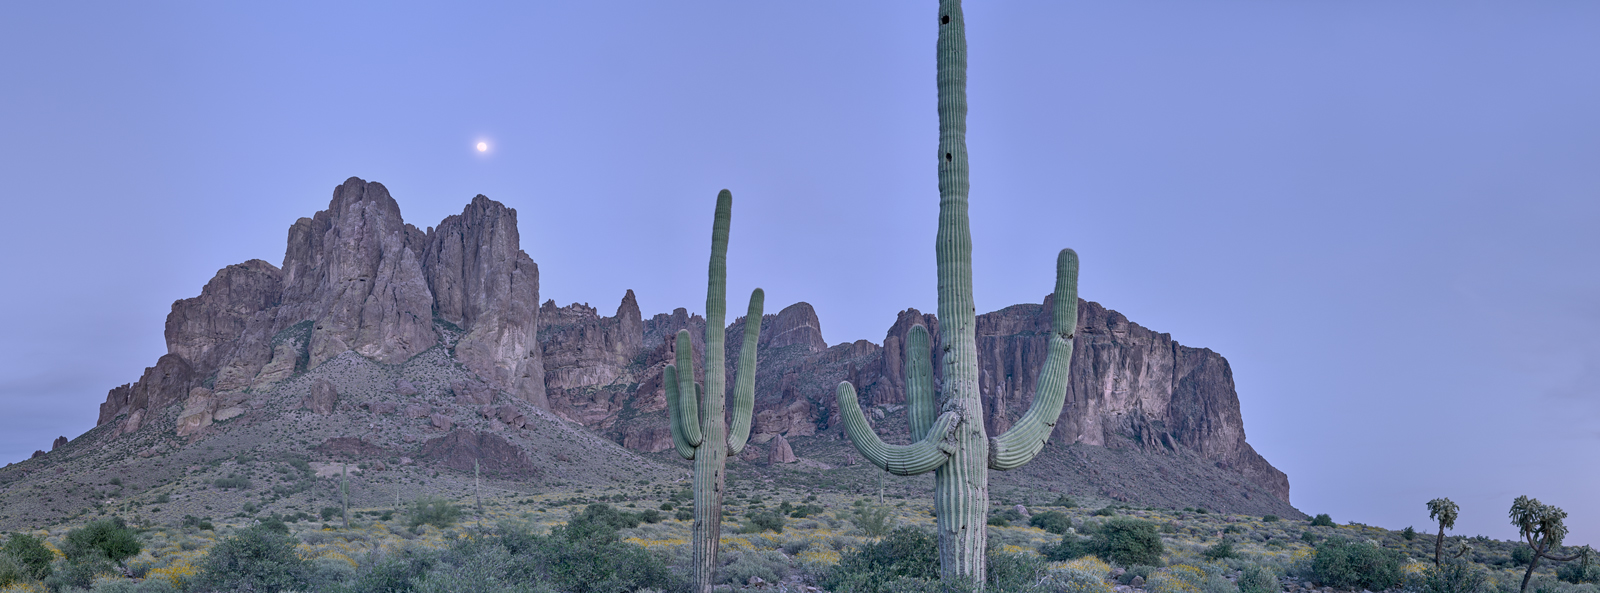 Panoramic, landscape, photography, moonrise, twilight, Arizona, Superstitions, sonoran, desert, spring, cactus, saguaro, paysage...